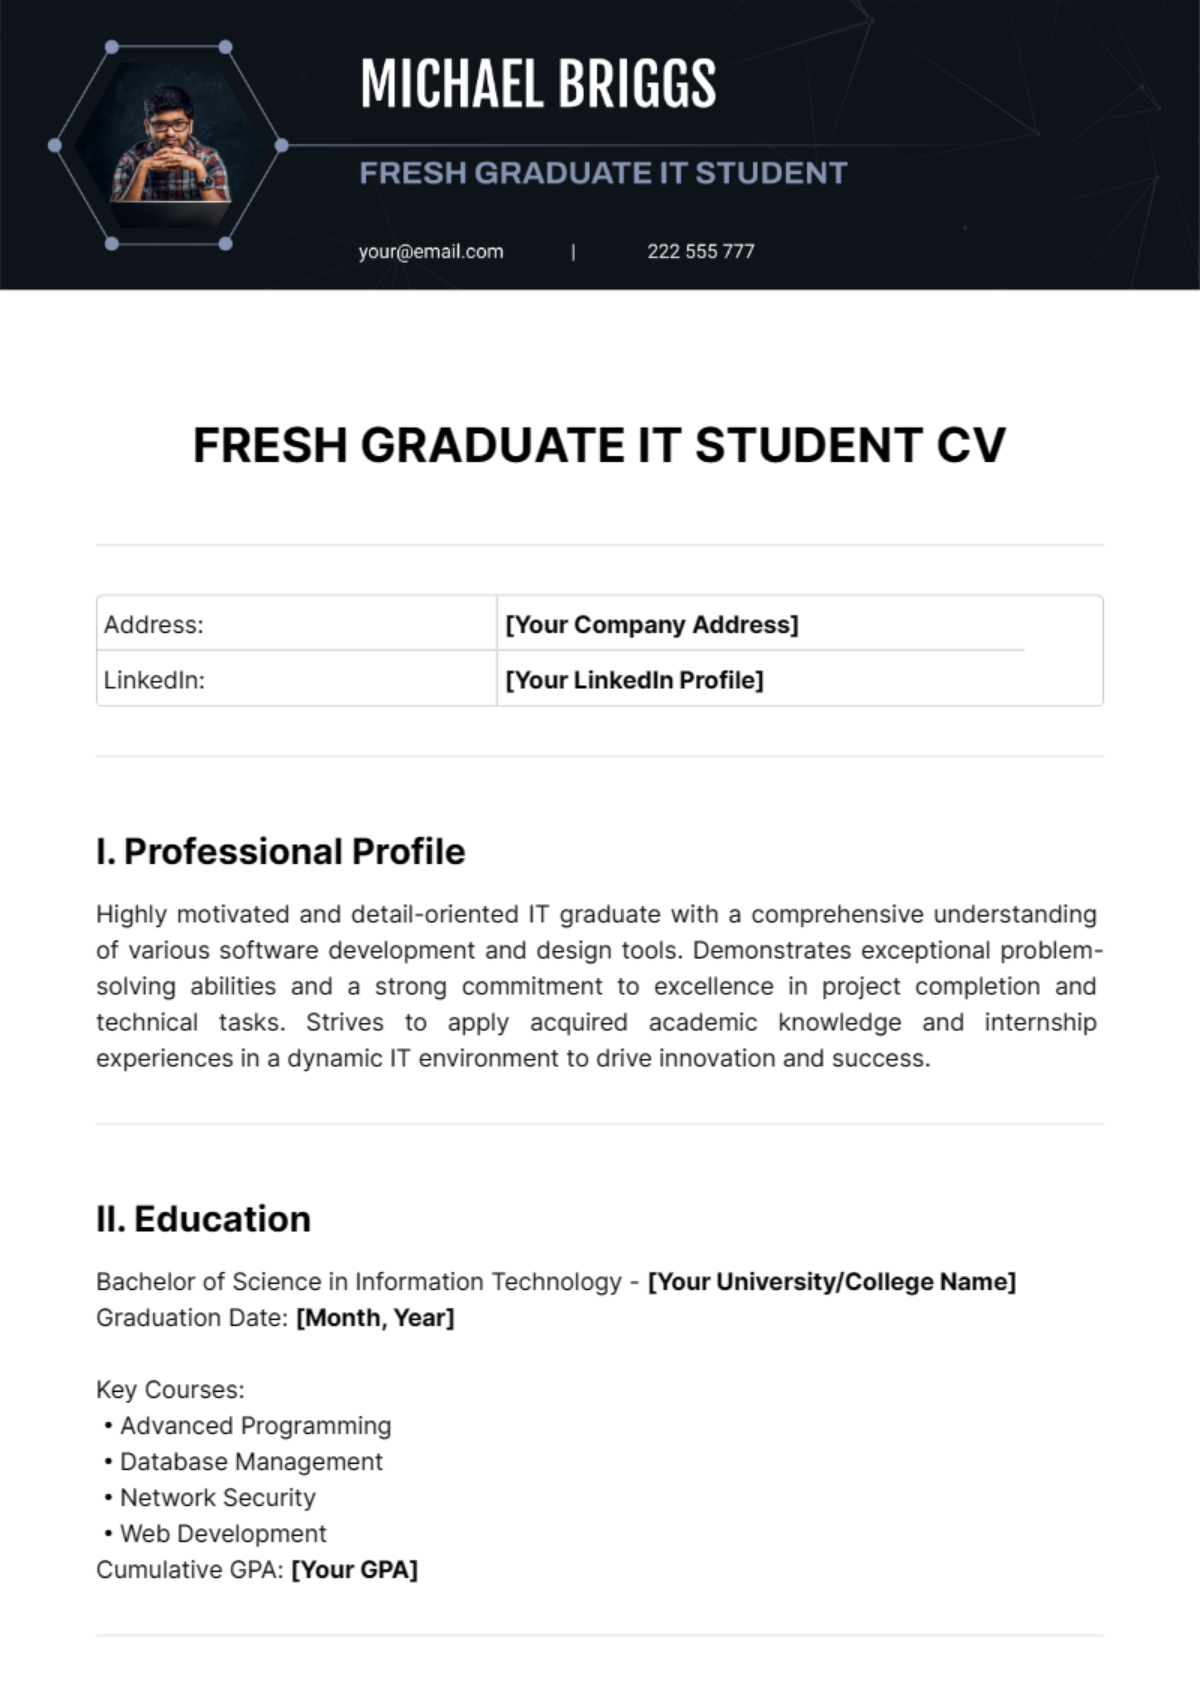 Fresh Graduate IT Student CV Template